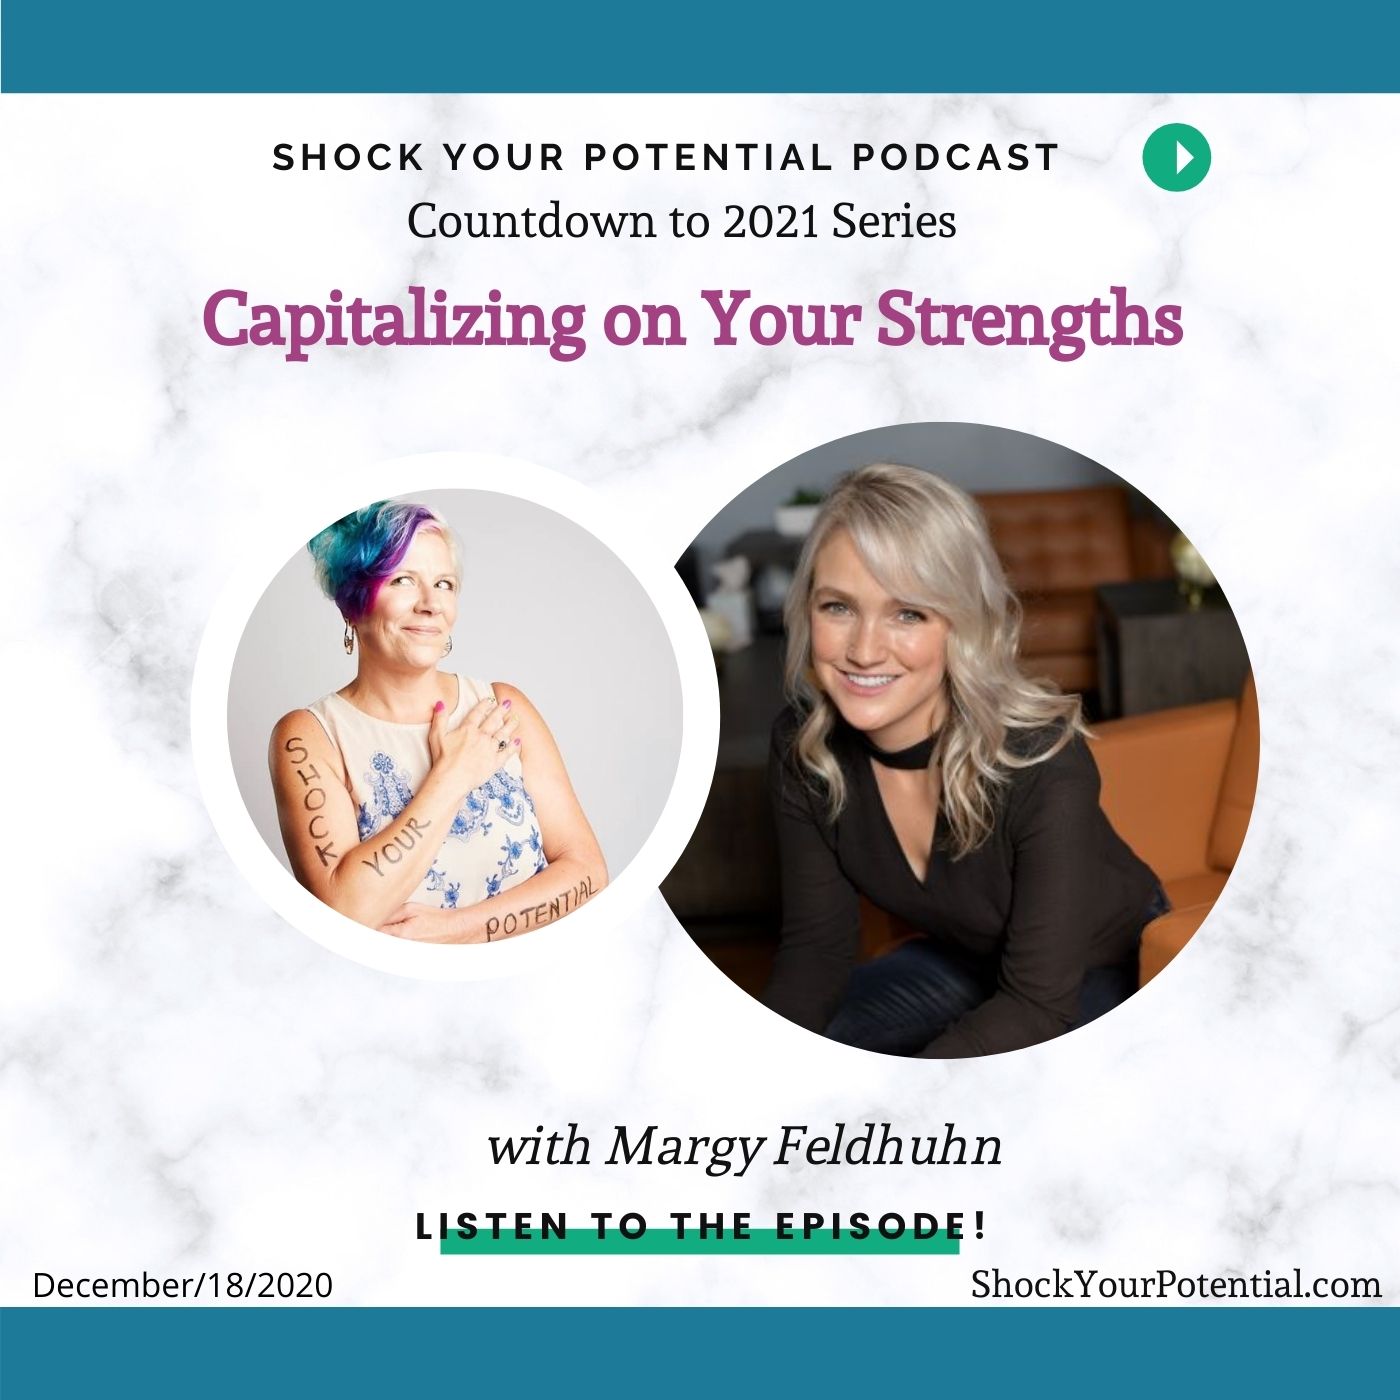 Capitalizing on Your Strengths – Margy Feldhuhn